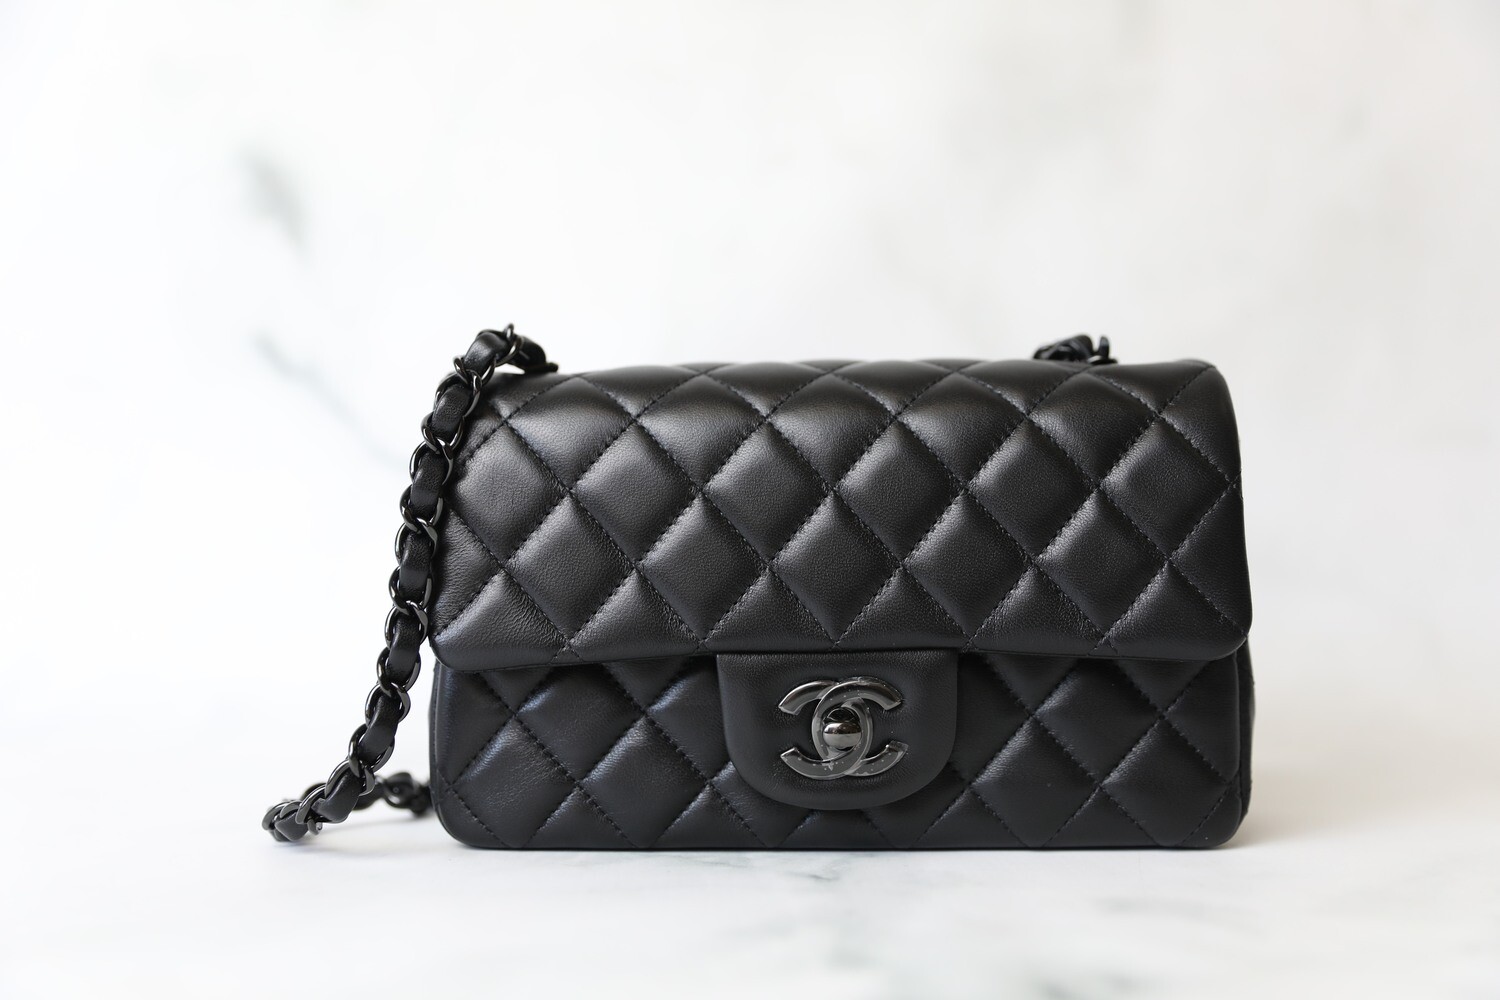 chanel black satchel purse